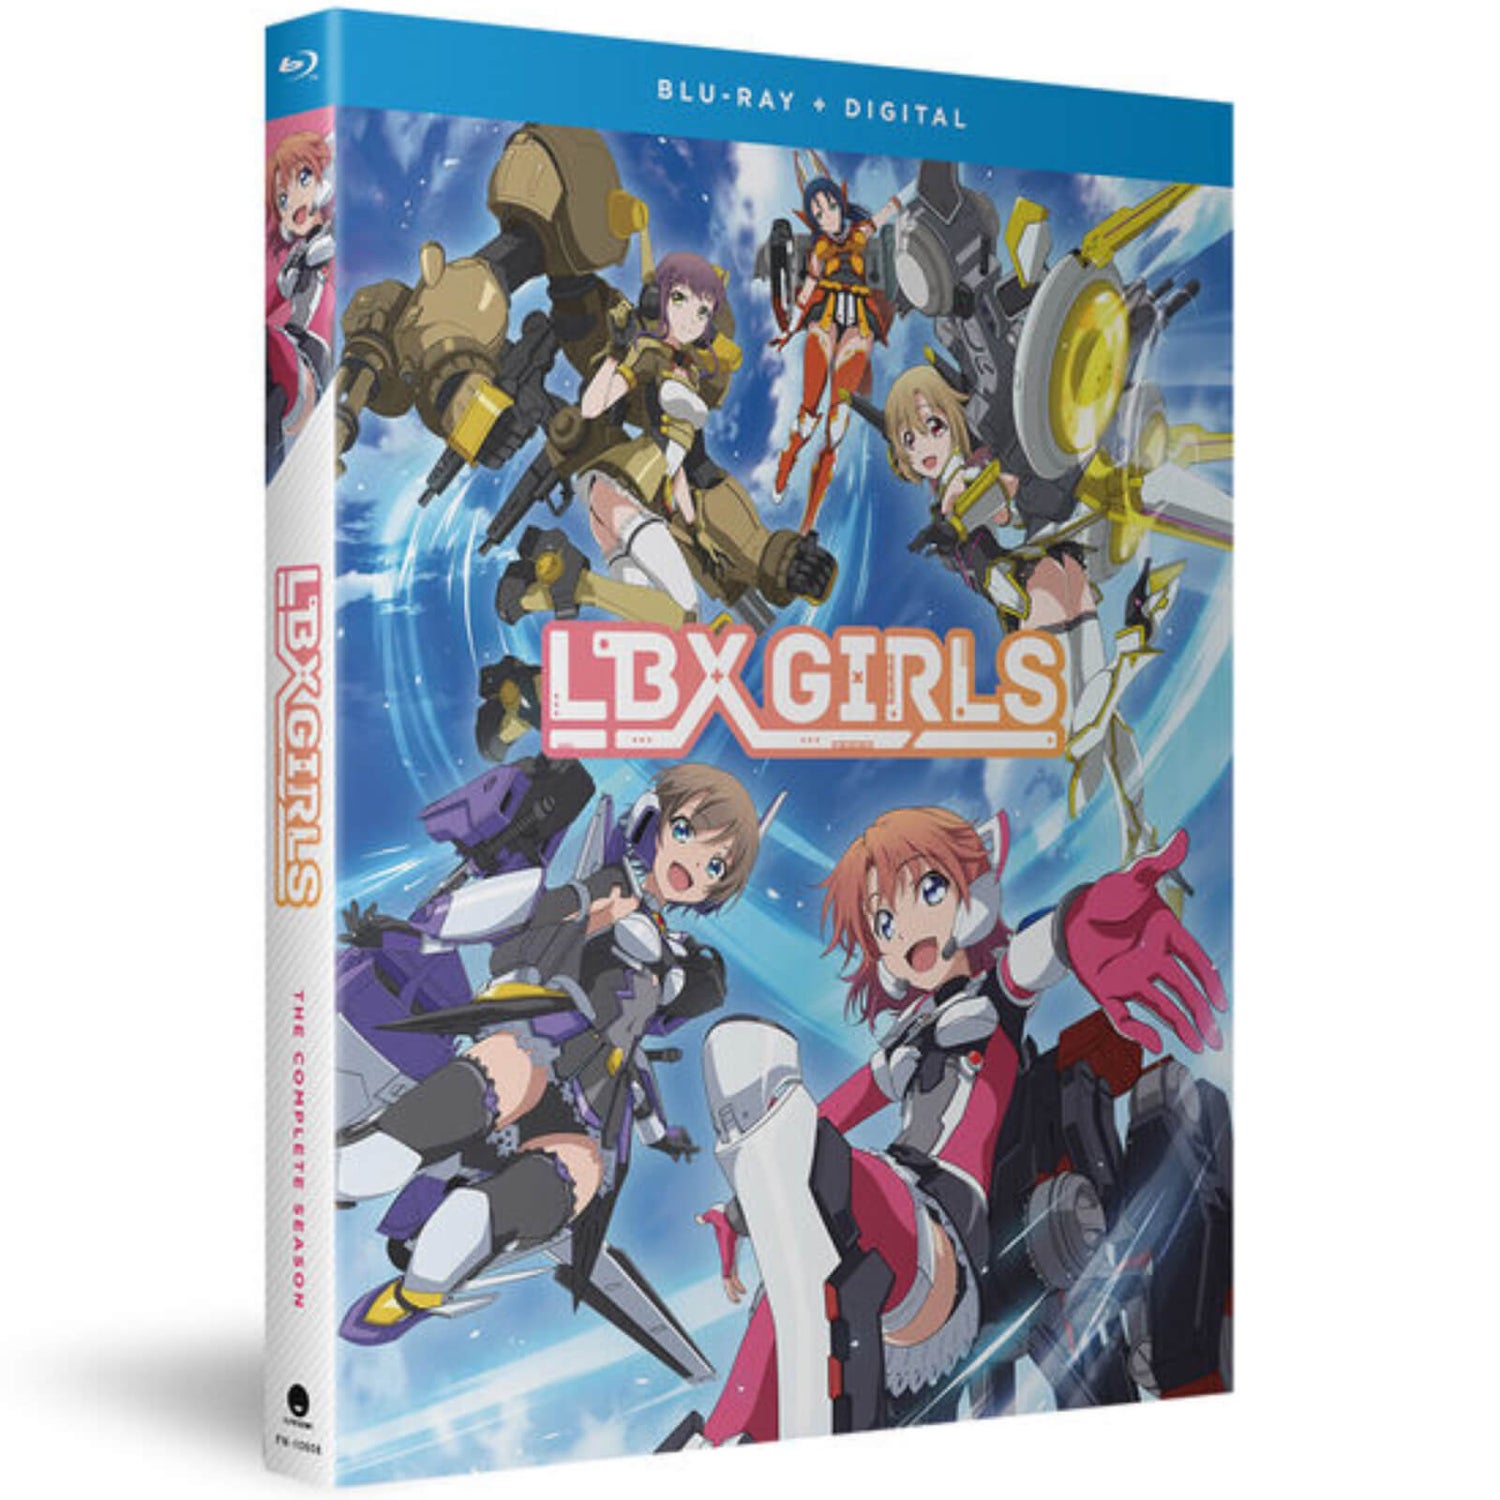 LBX Girls: The Complete Season (US Import)